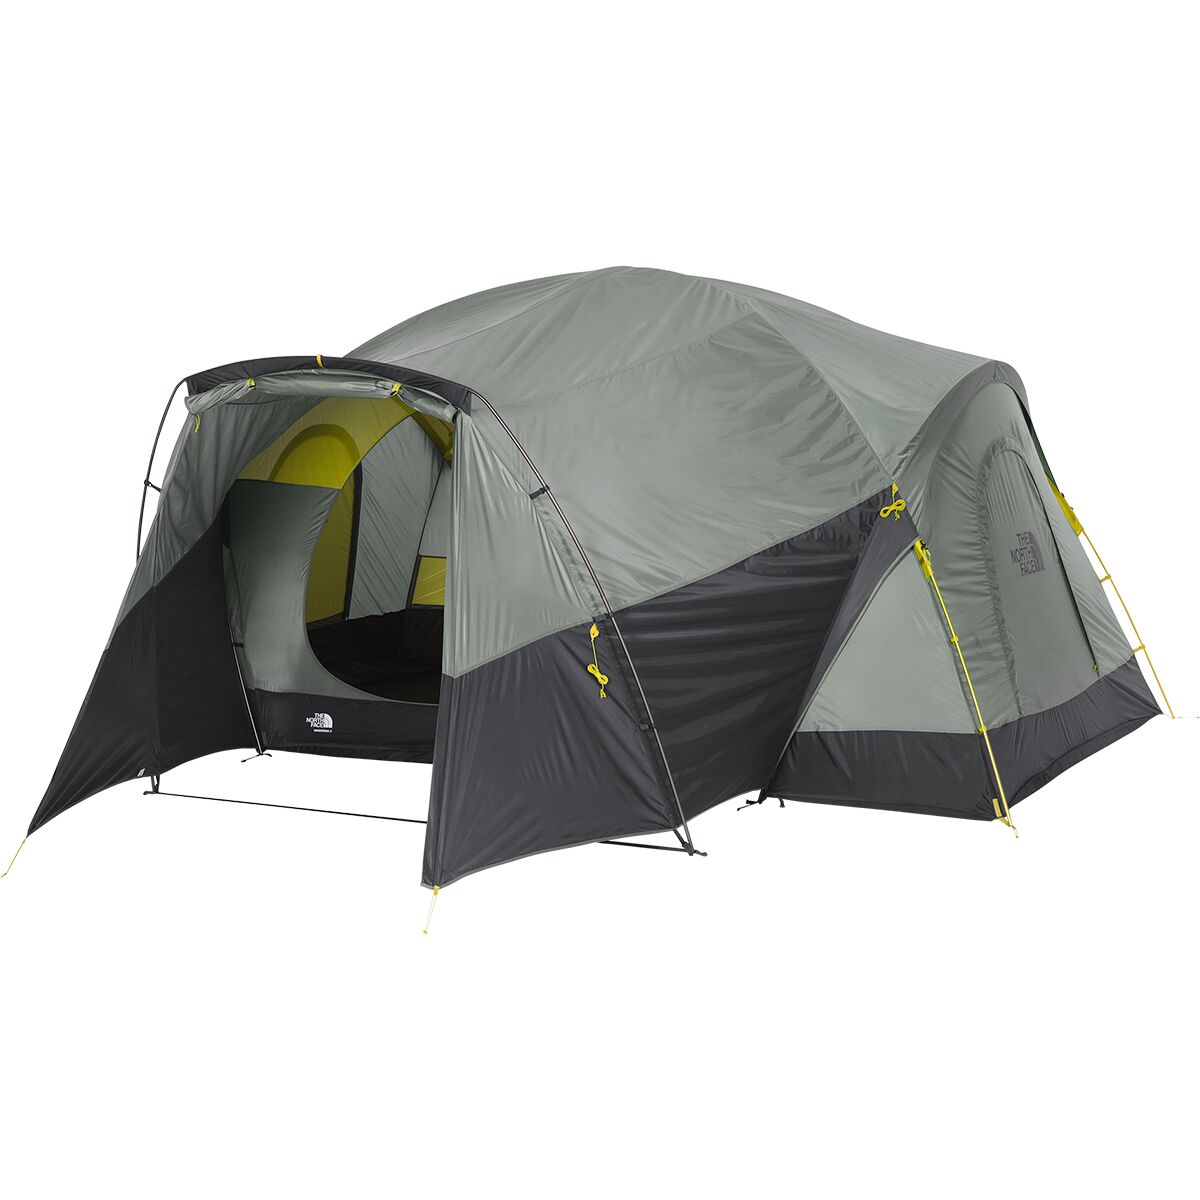 The North Face Wawona Tent: 8-Person 3-Season $416